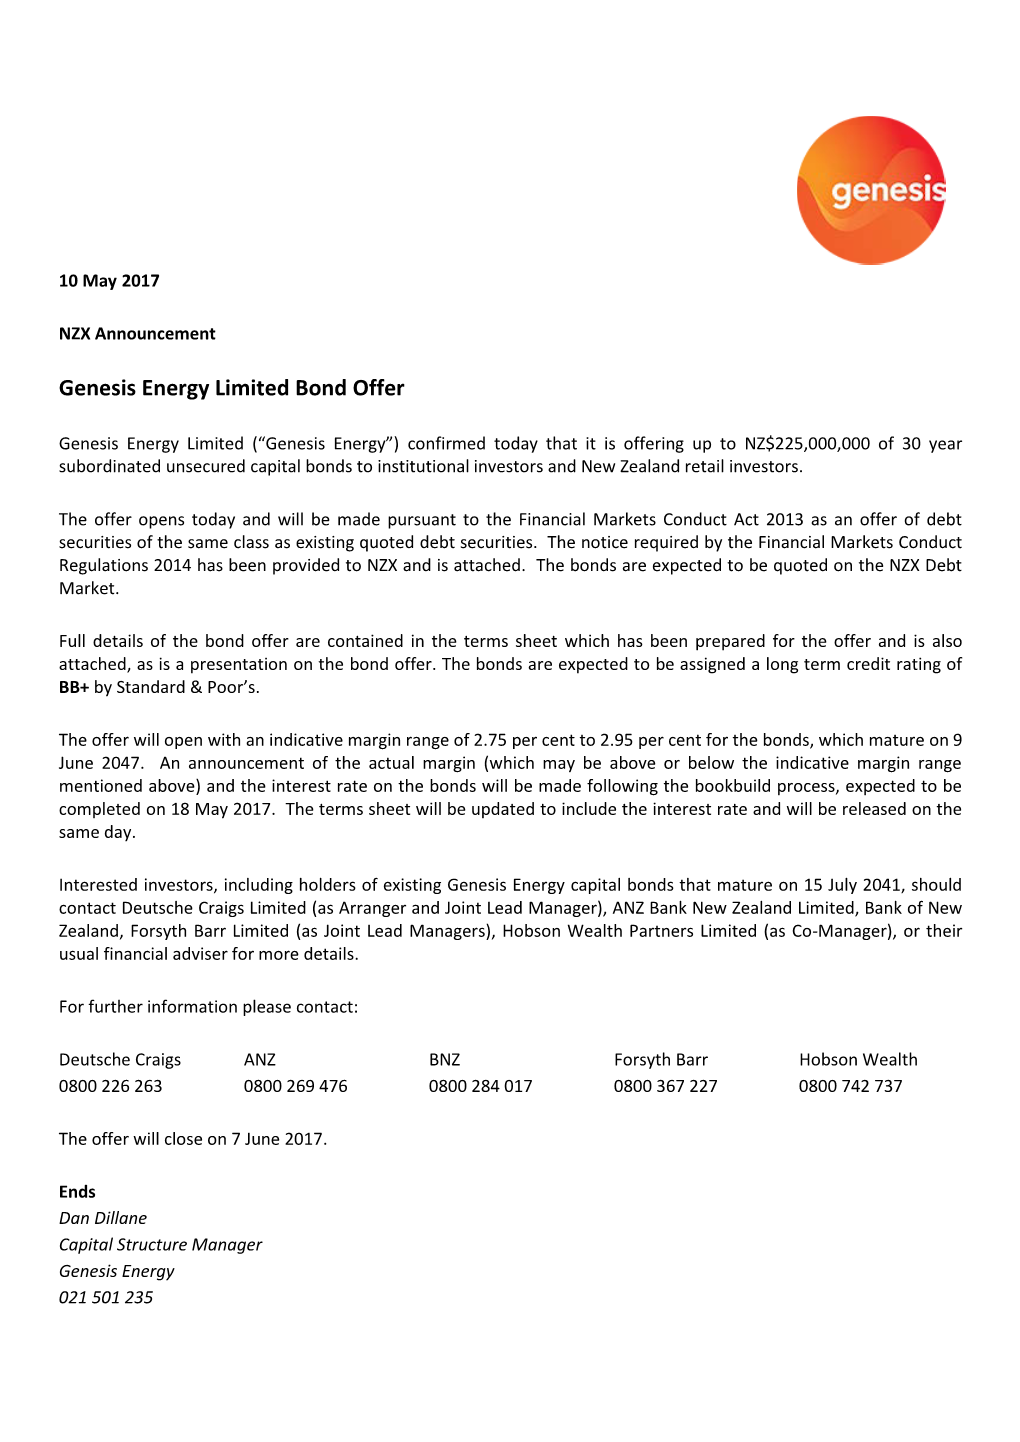 Genesis Energy Limited Bond Offer Announcement